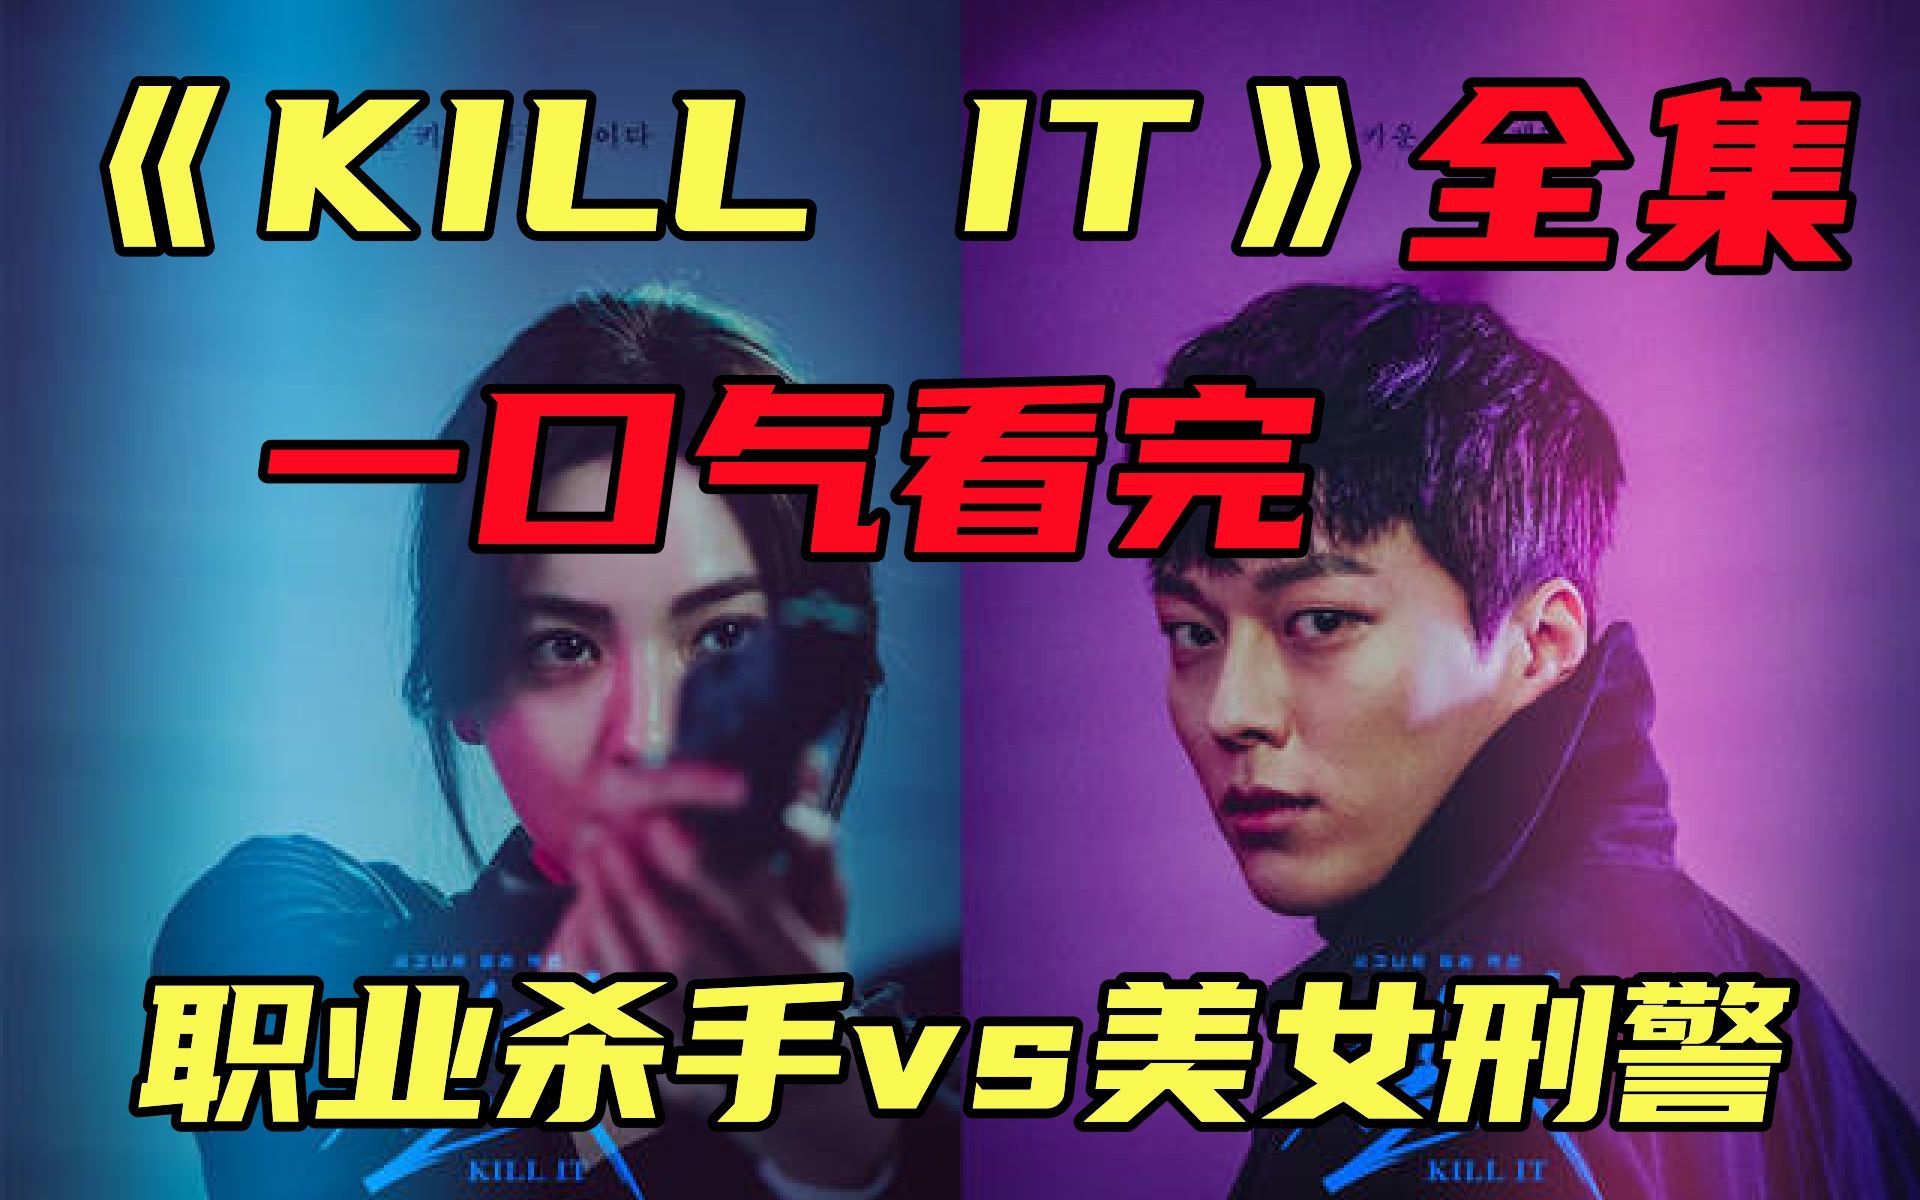 【KILL IT】全集，一口气看完高分韩剧，职业杀手爱上美女刑警，是不是职业就注定了悲剧？